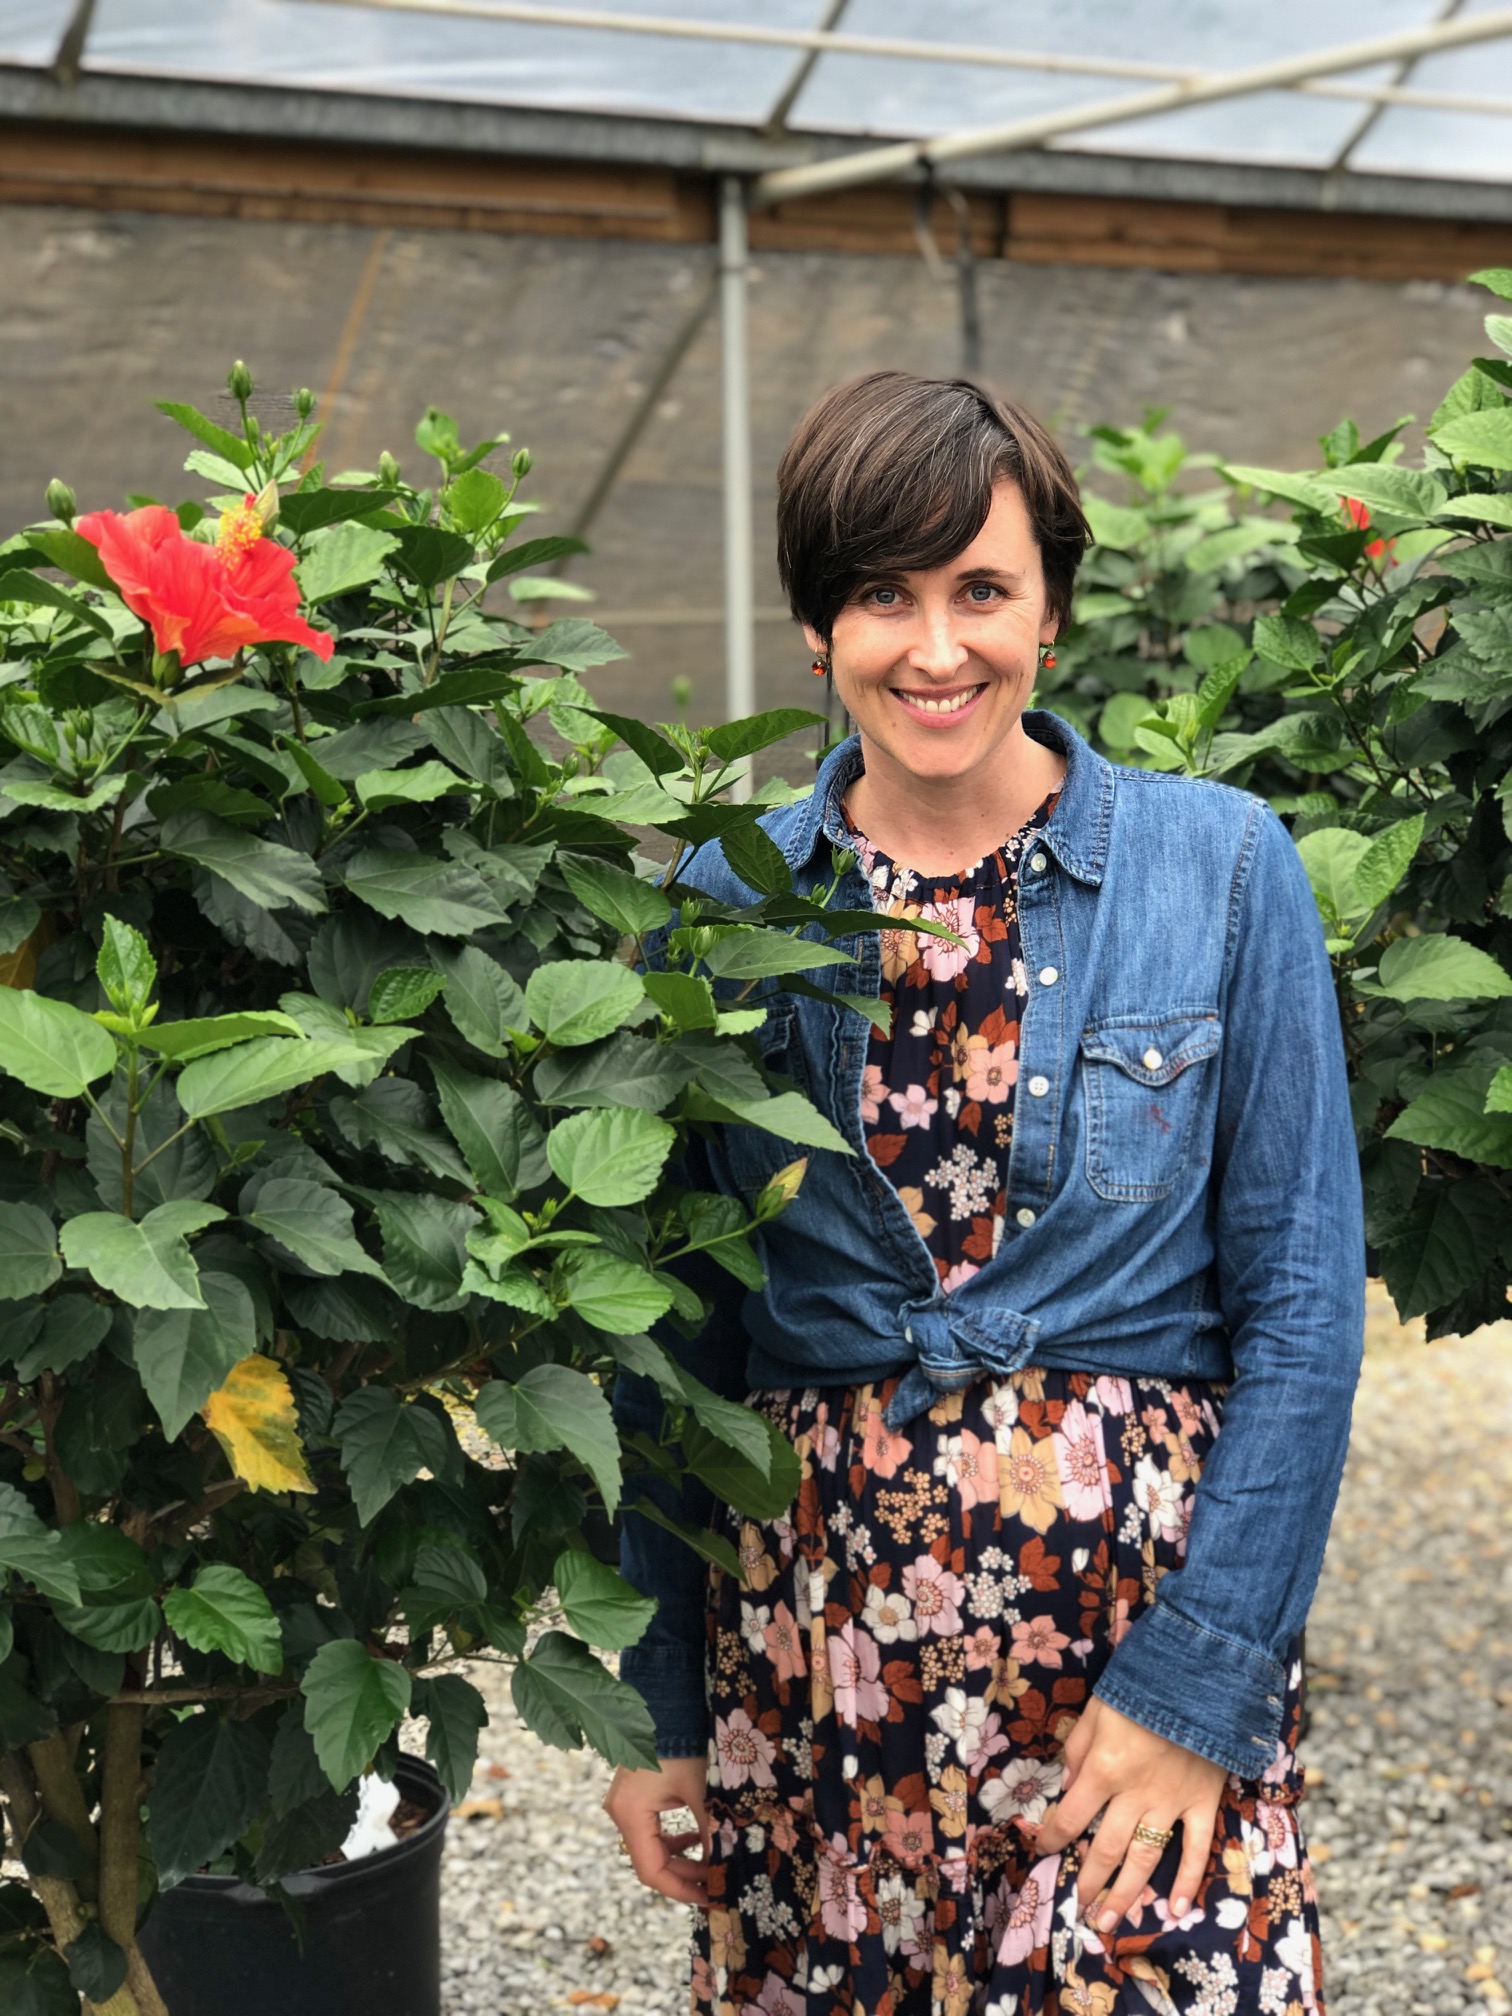 An award-winning garden communicator and trend spotter, Katie Dubow speaks around the world on garden trends and marketing.